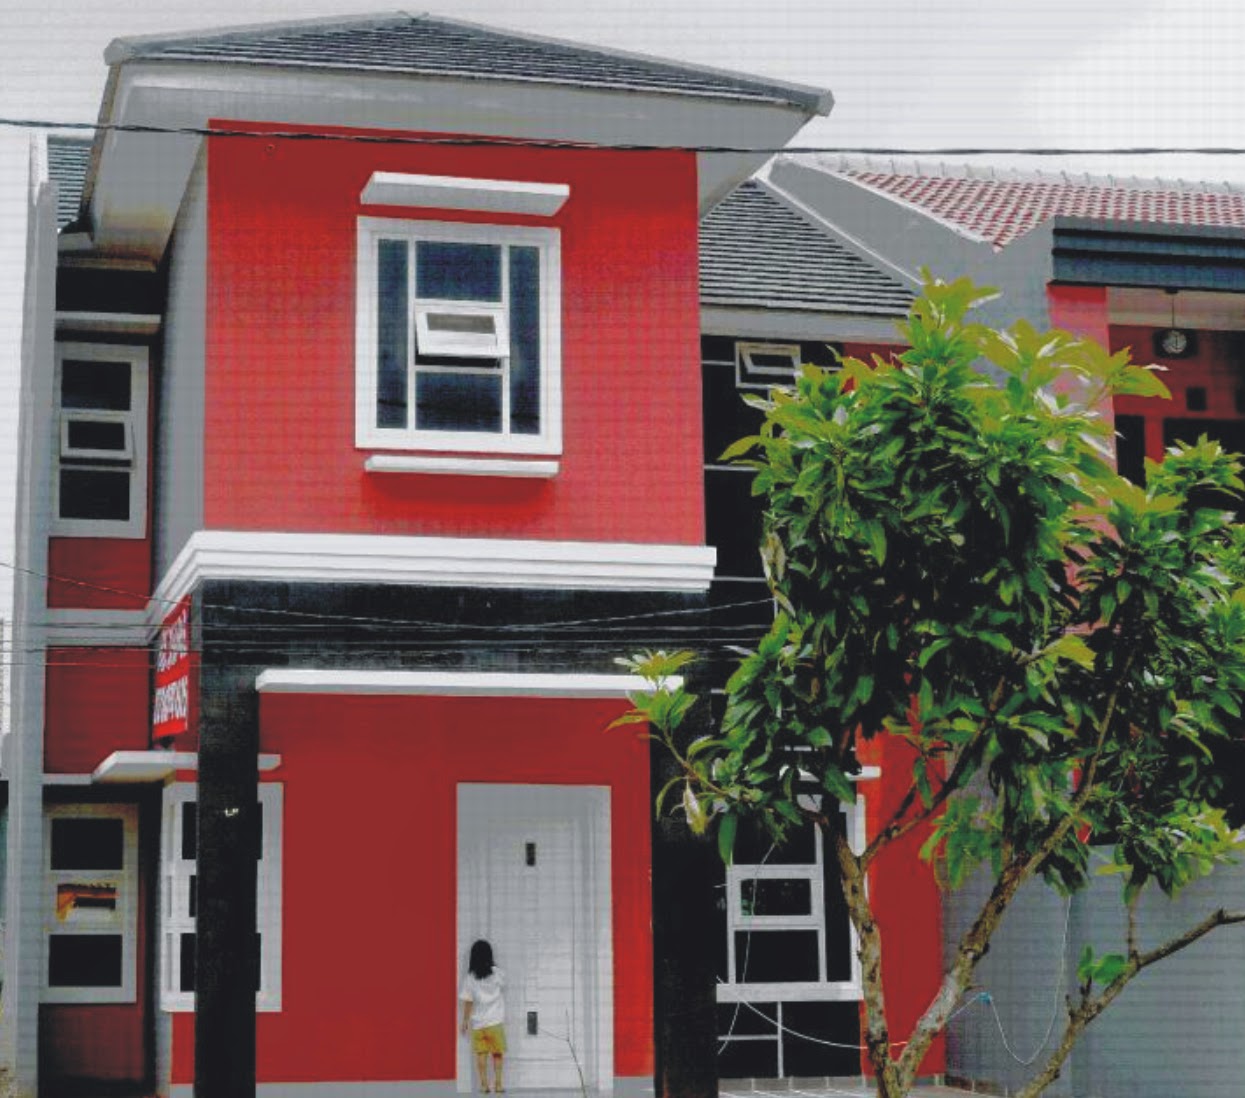 26 Rumah minimalis warna cat merah bata